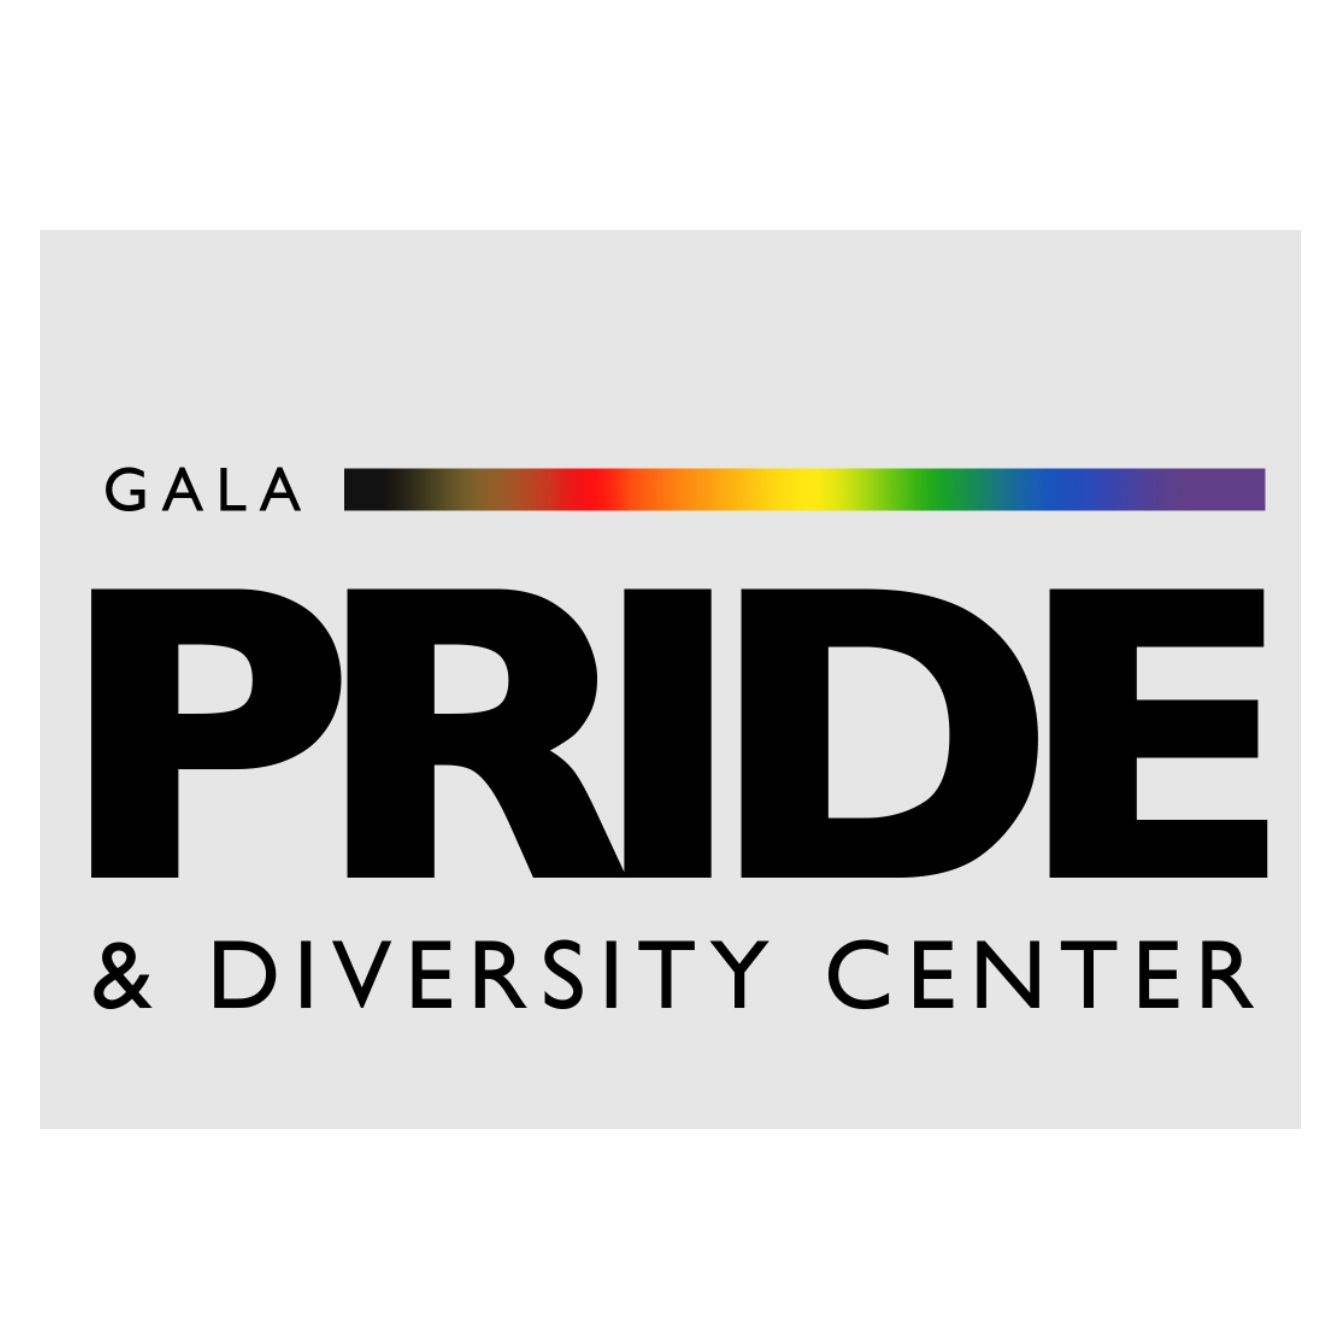 LGBTQ Organization in San Diego California - Gala Pride and Diversity Center